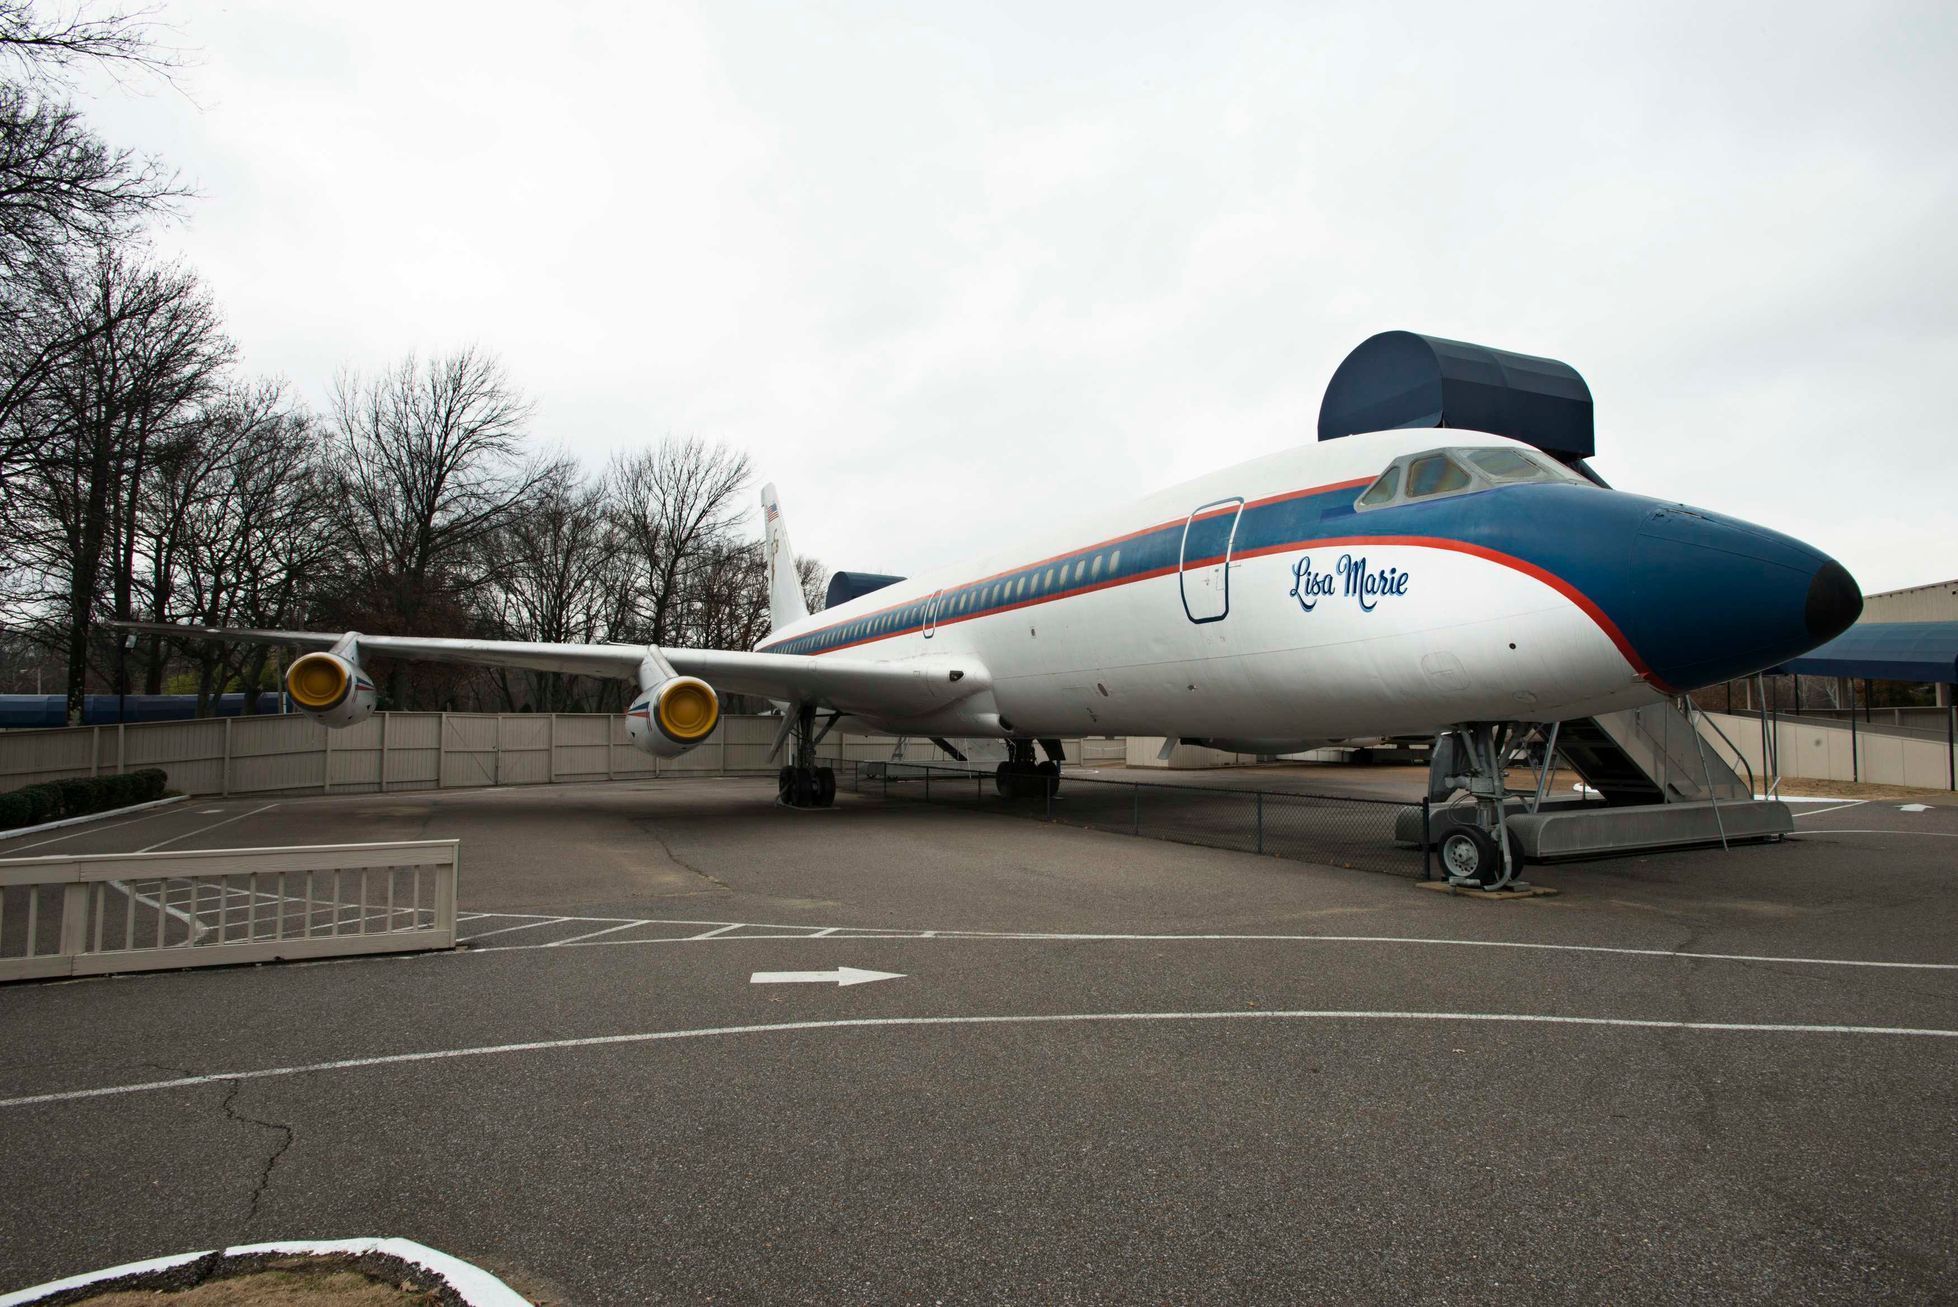 letadlo Elvise Presleyho, Lisa Marie